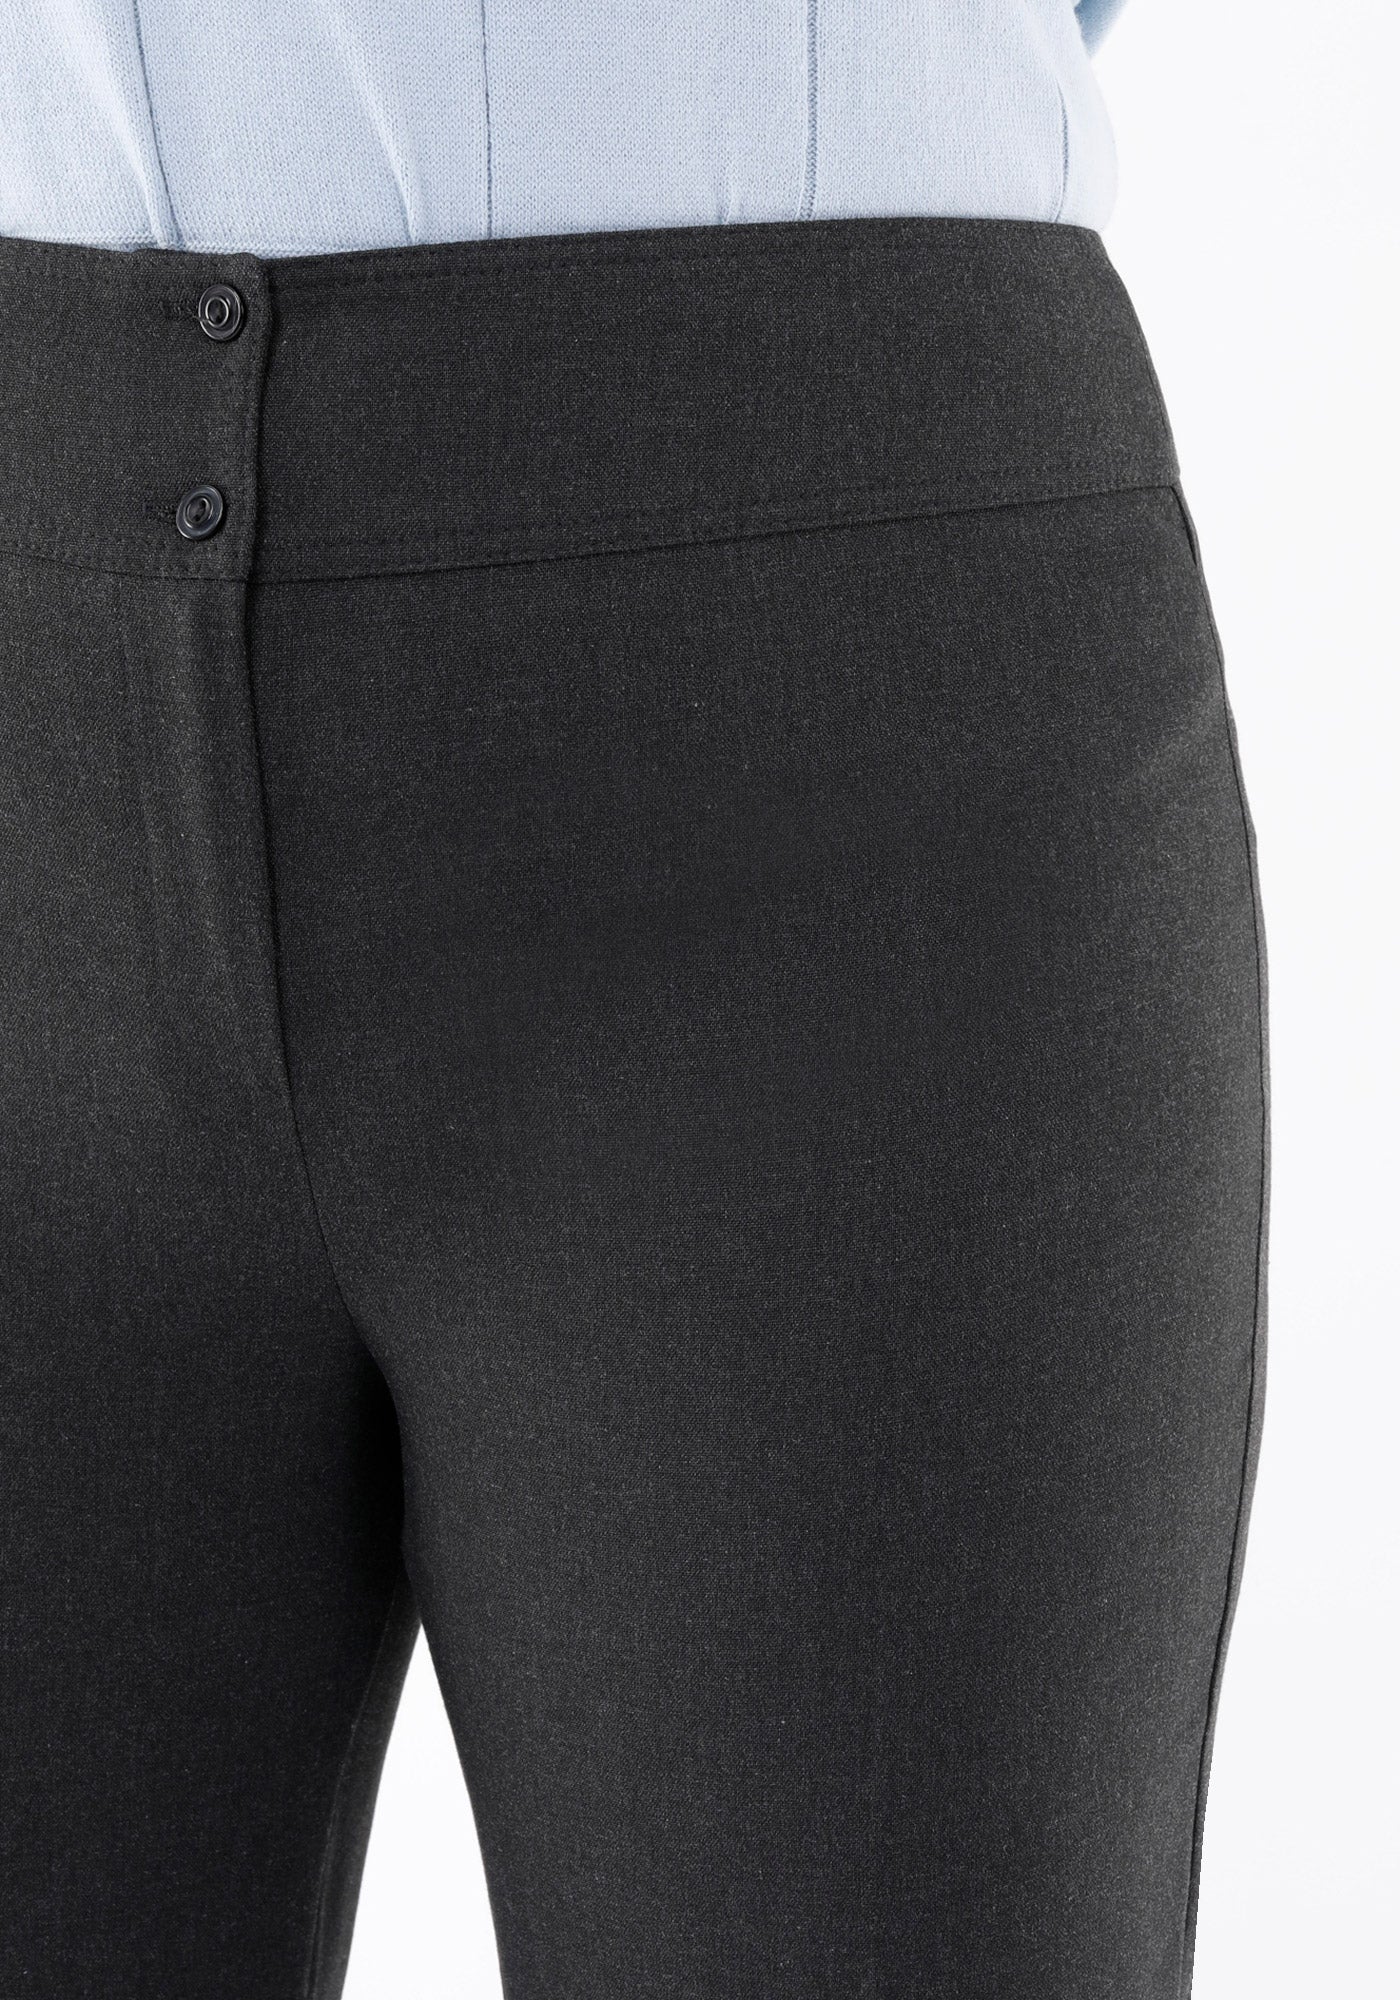 Betabrand Yoga Dress Pants Size Medium Charcoal Gray Straight Leg Stretch